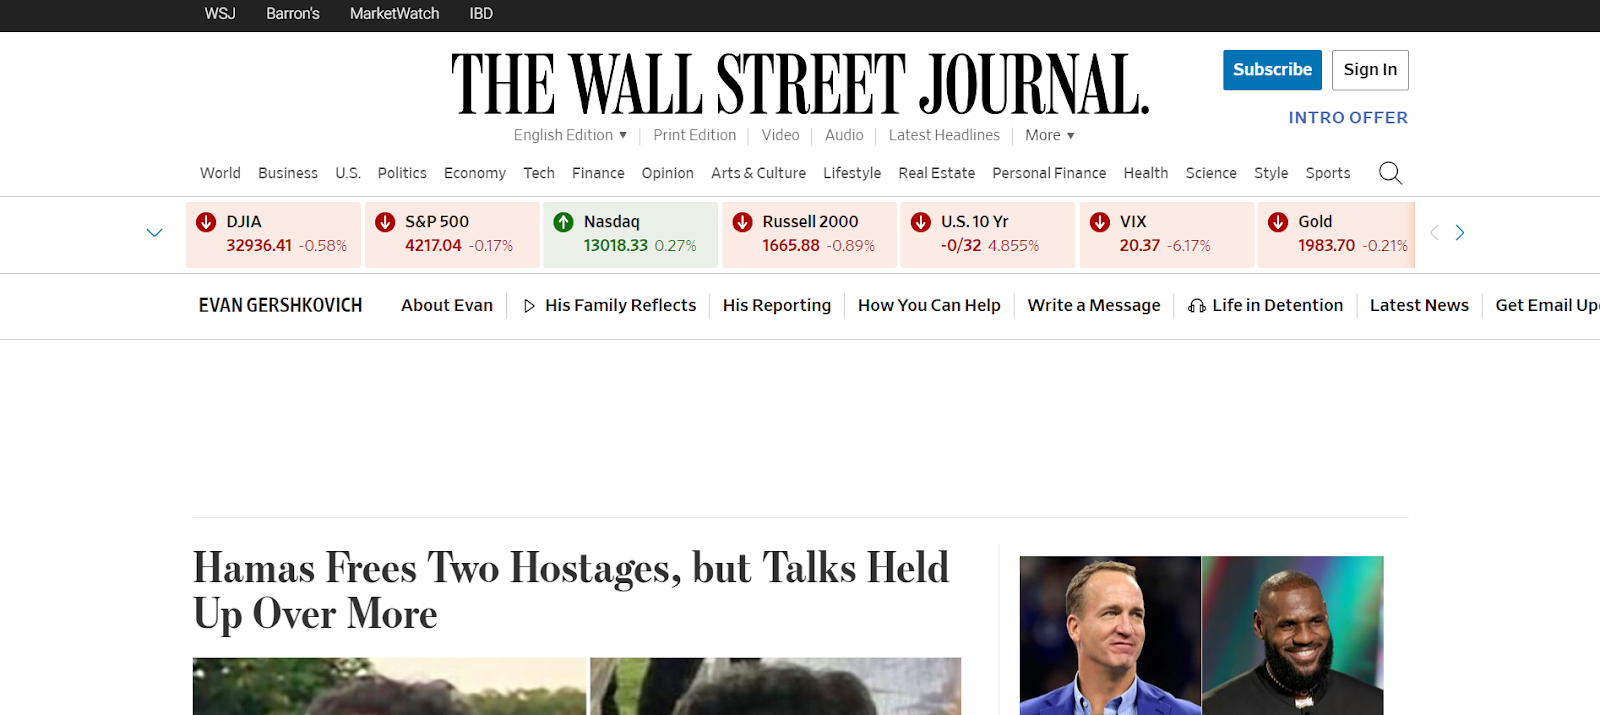 9. Jurnal Wall Street